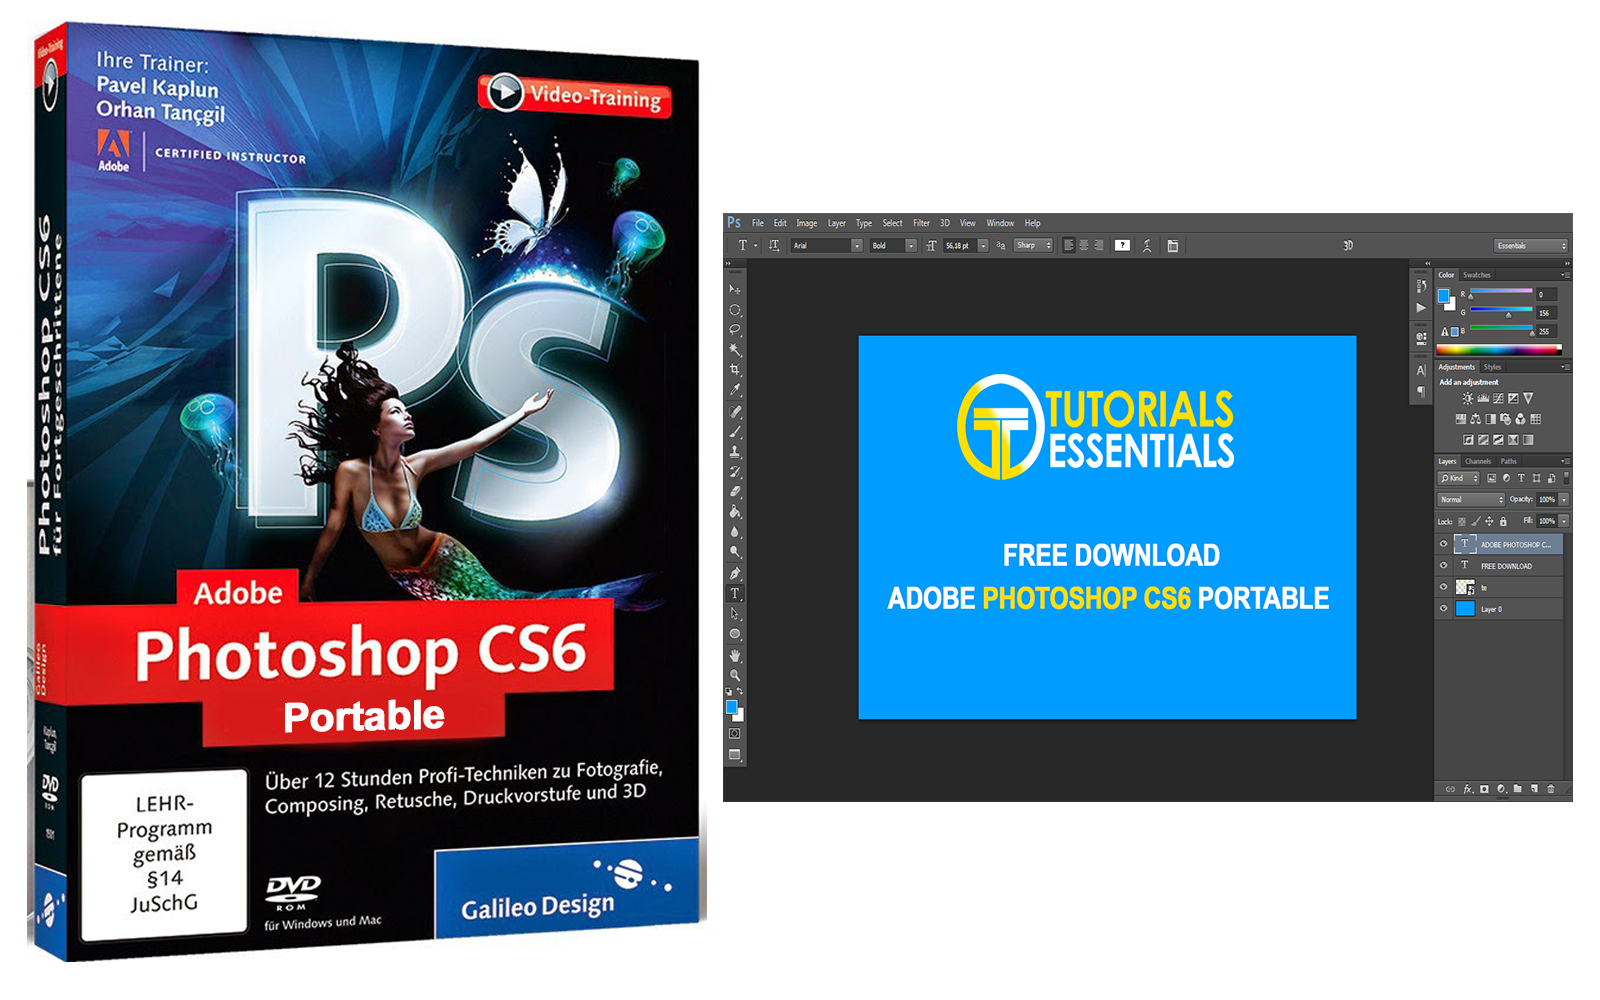 Adobe Photoshop Cs6 Portable